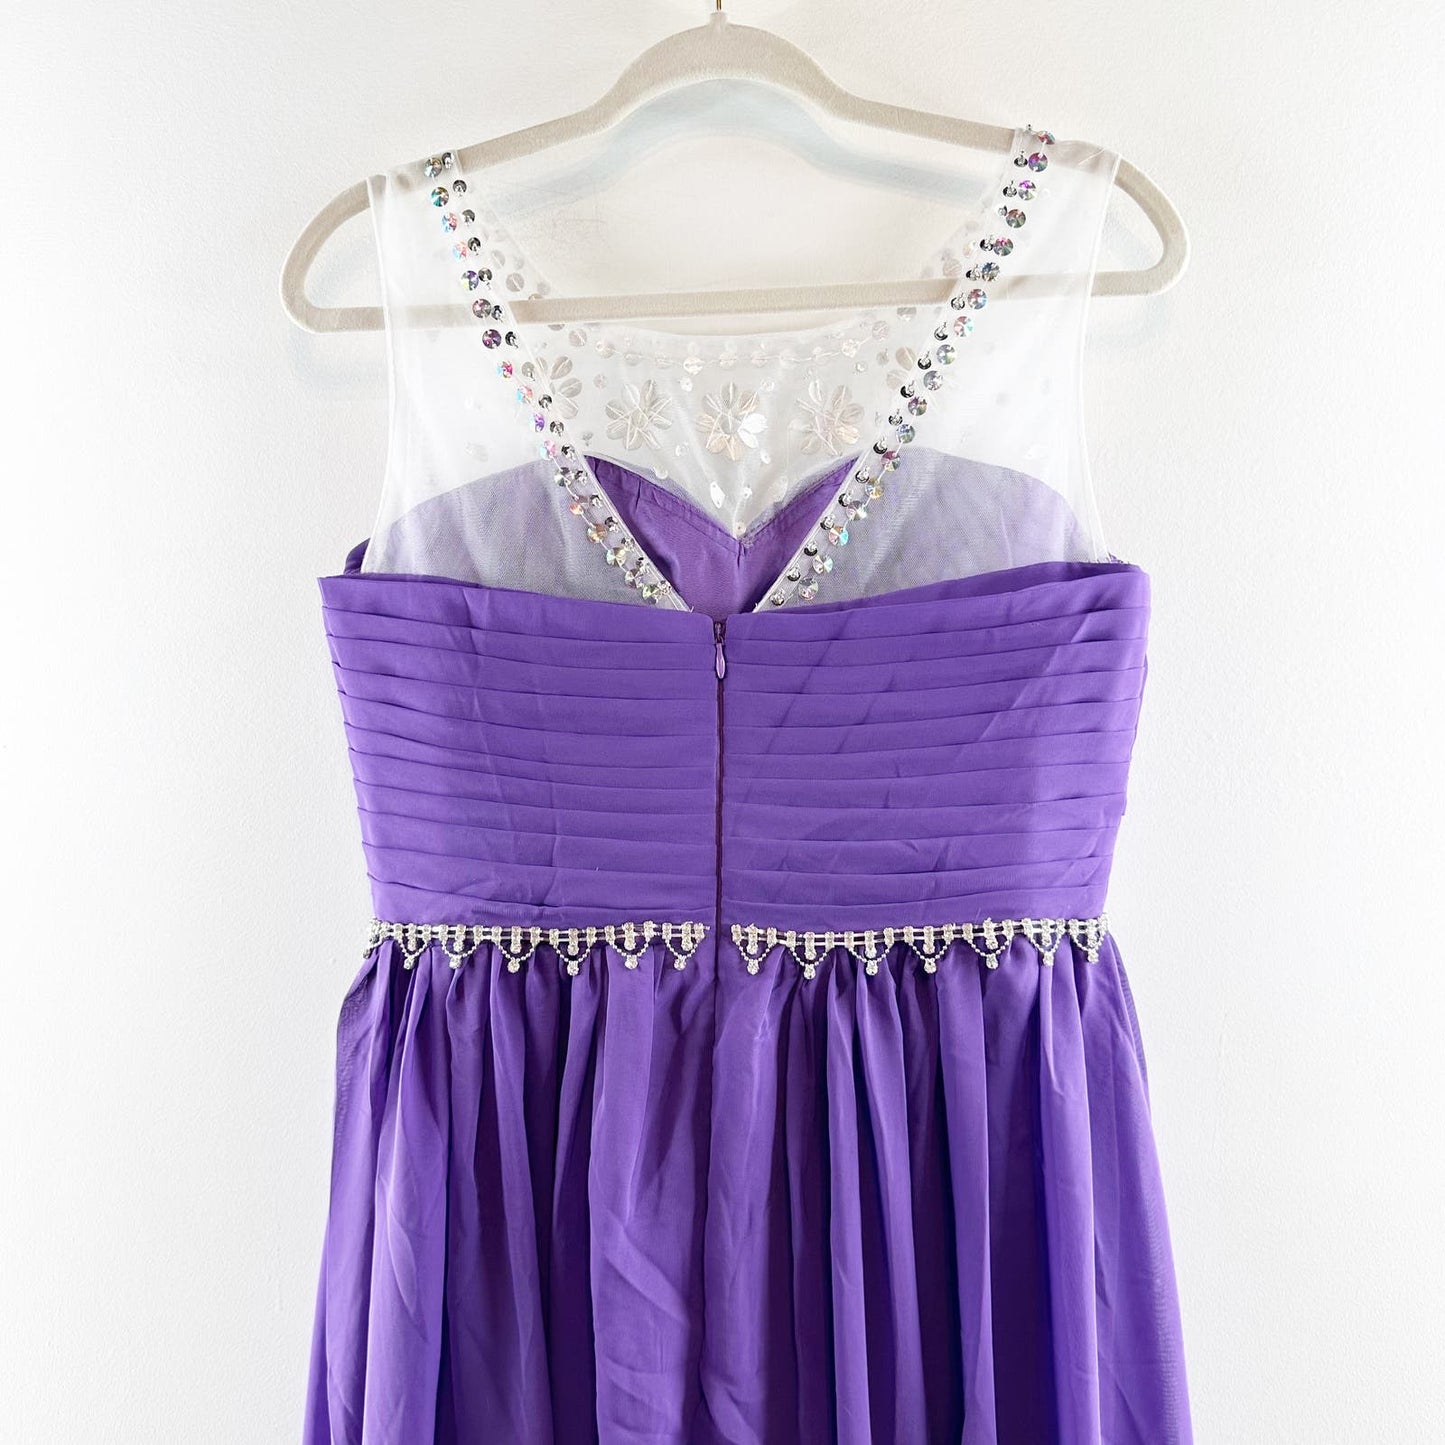 Formal Sleeveless Rhinestone Sheer Neckline Gown Maxi Dress Royal Purple Large